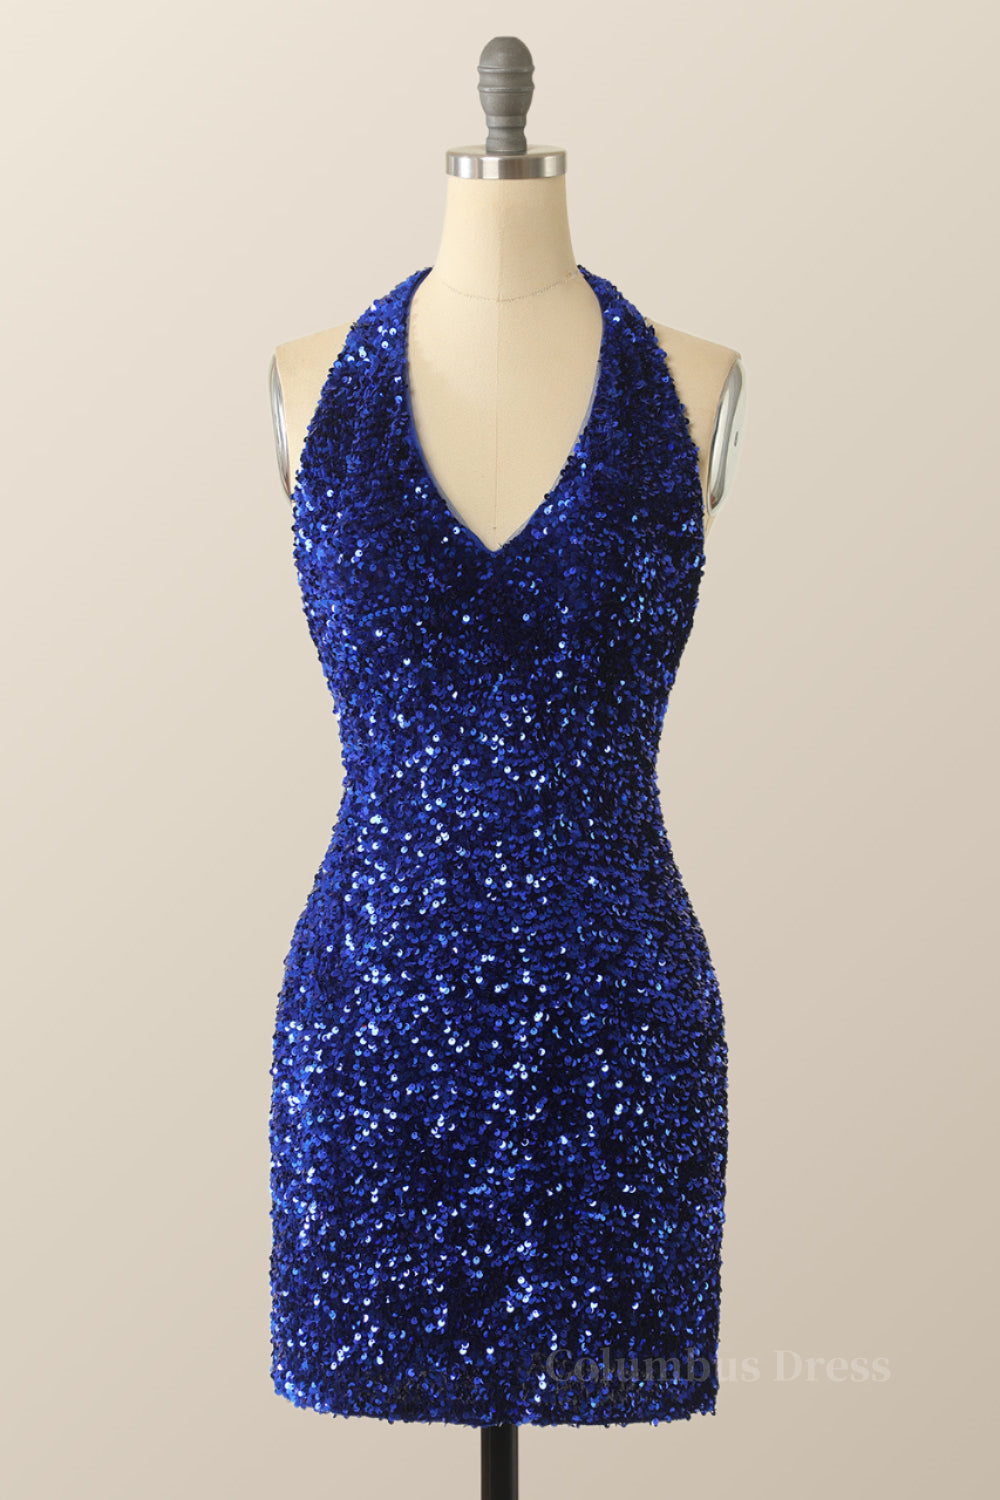 Homecoming Dress Sweetheart, Halter Royal Blue Sequin Bodycon Dress